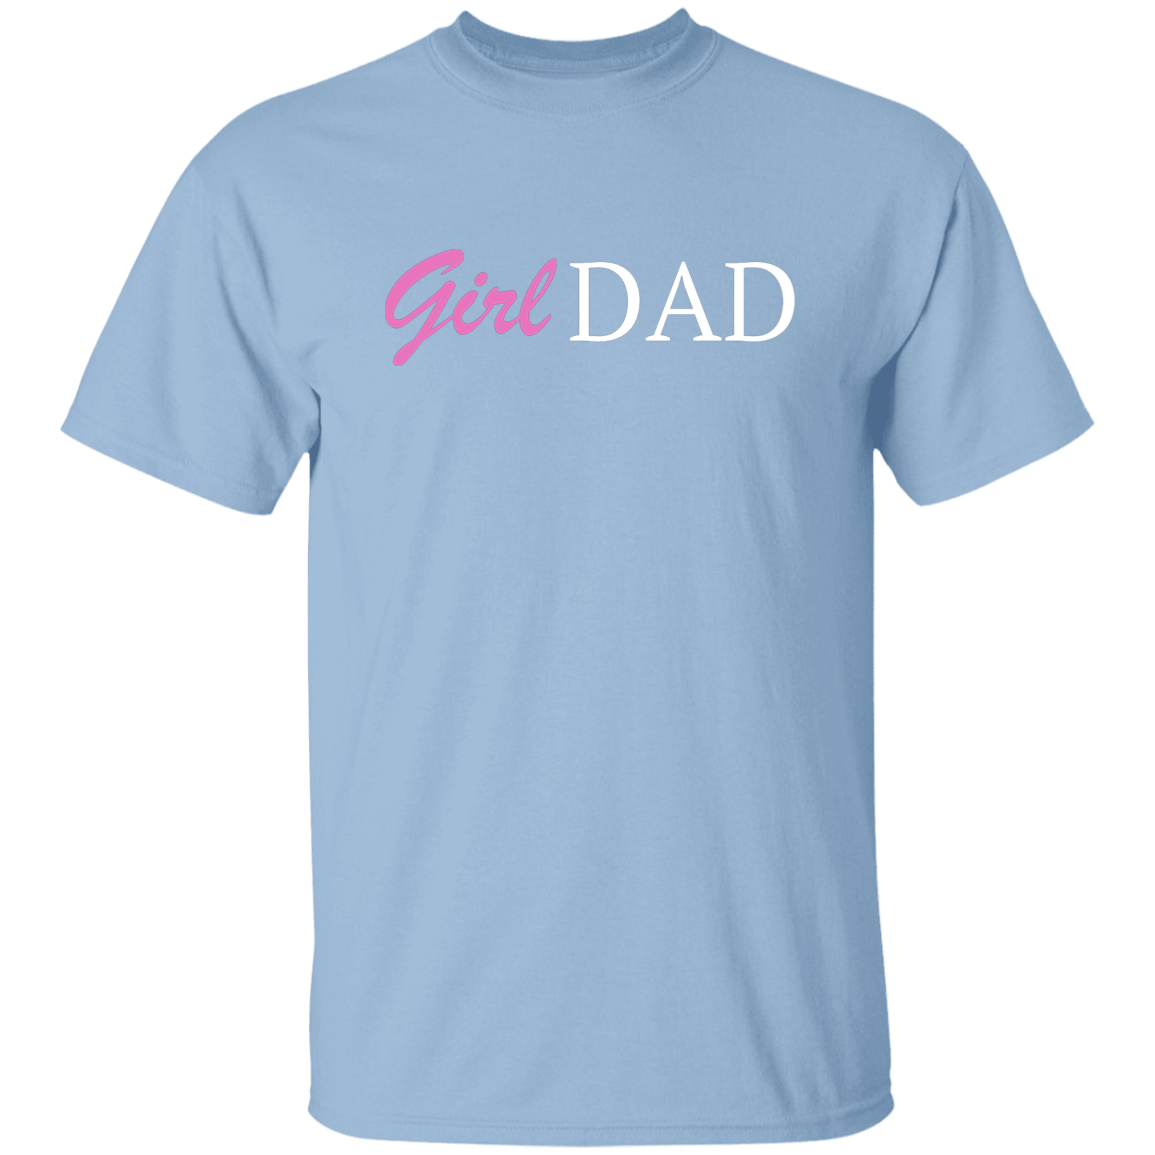 Mens - "Girl Dad" Matching Shirt For Dad